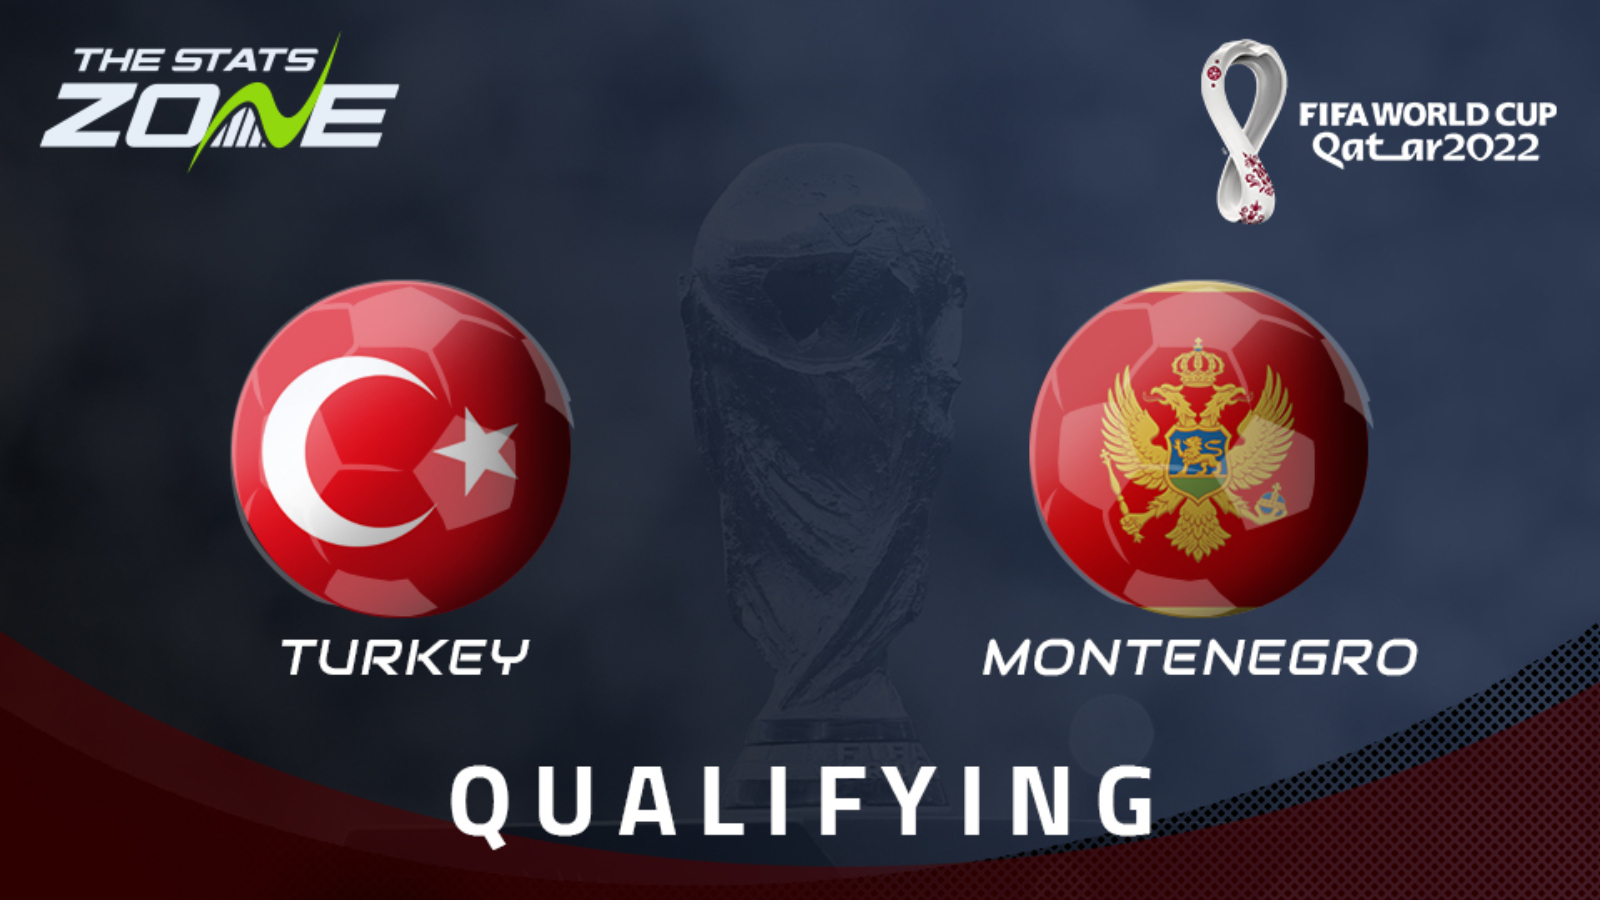 Montenegro vs turkey